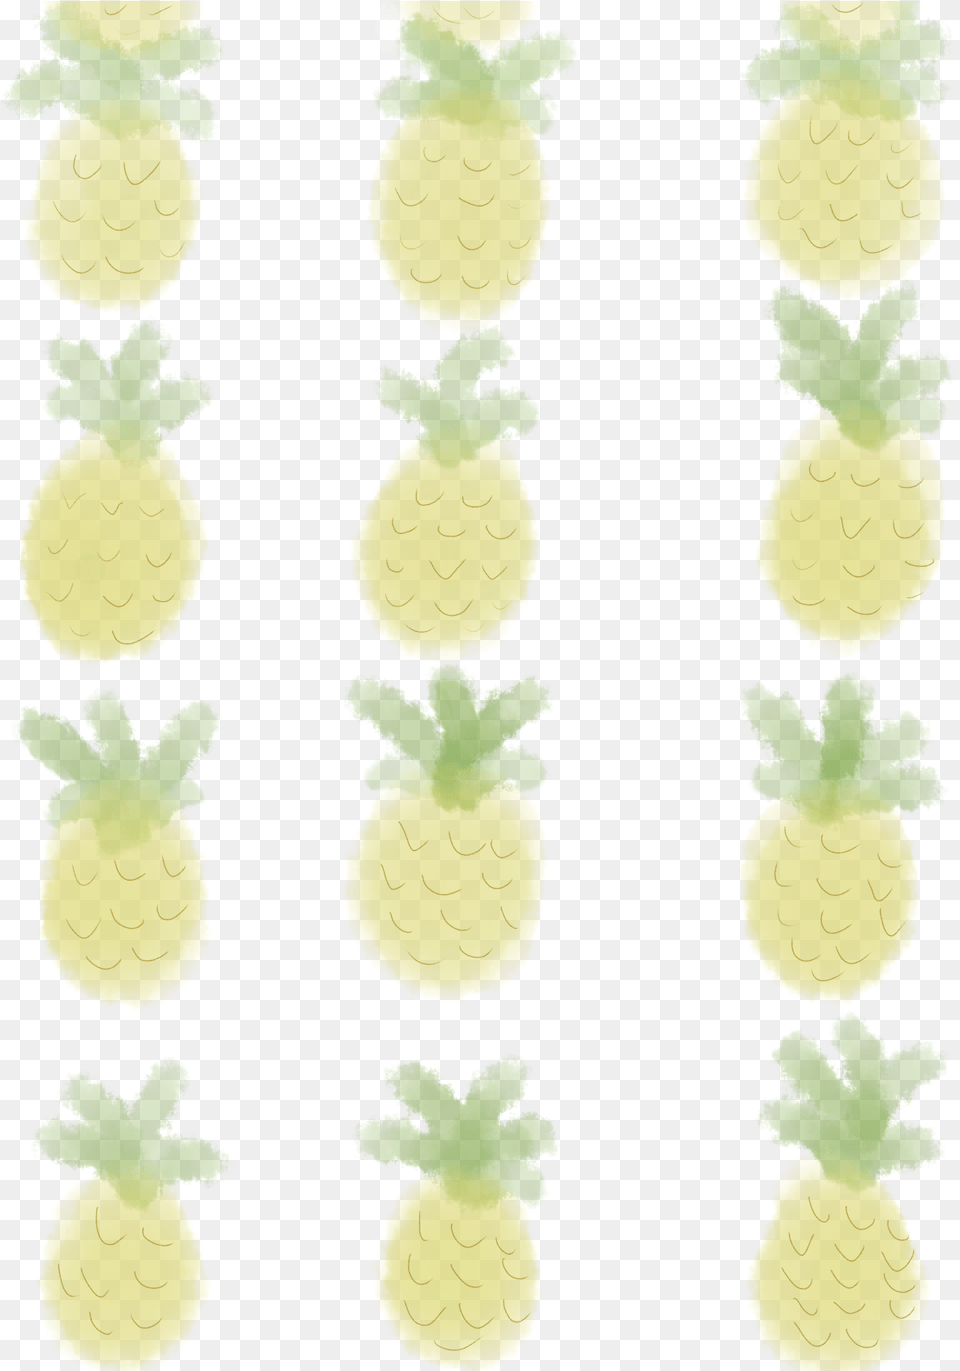 Pineapple Tumblr Pineapple, Produce, Plant, Food, Fruit Png Image